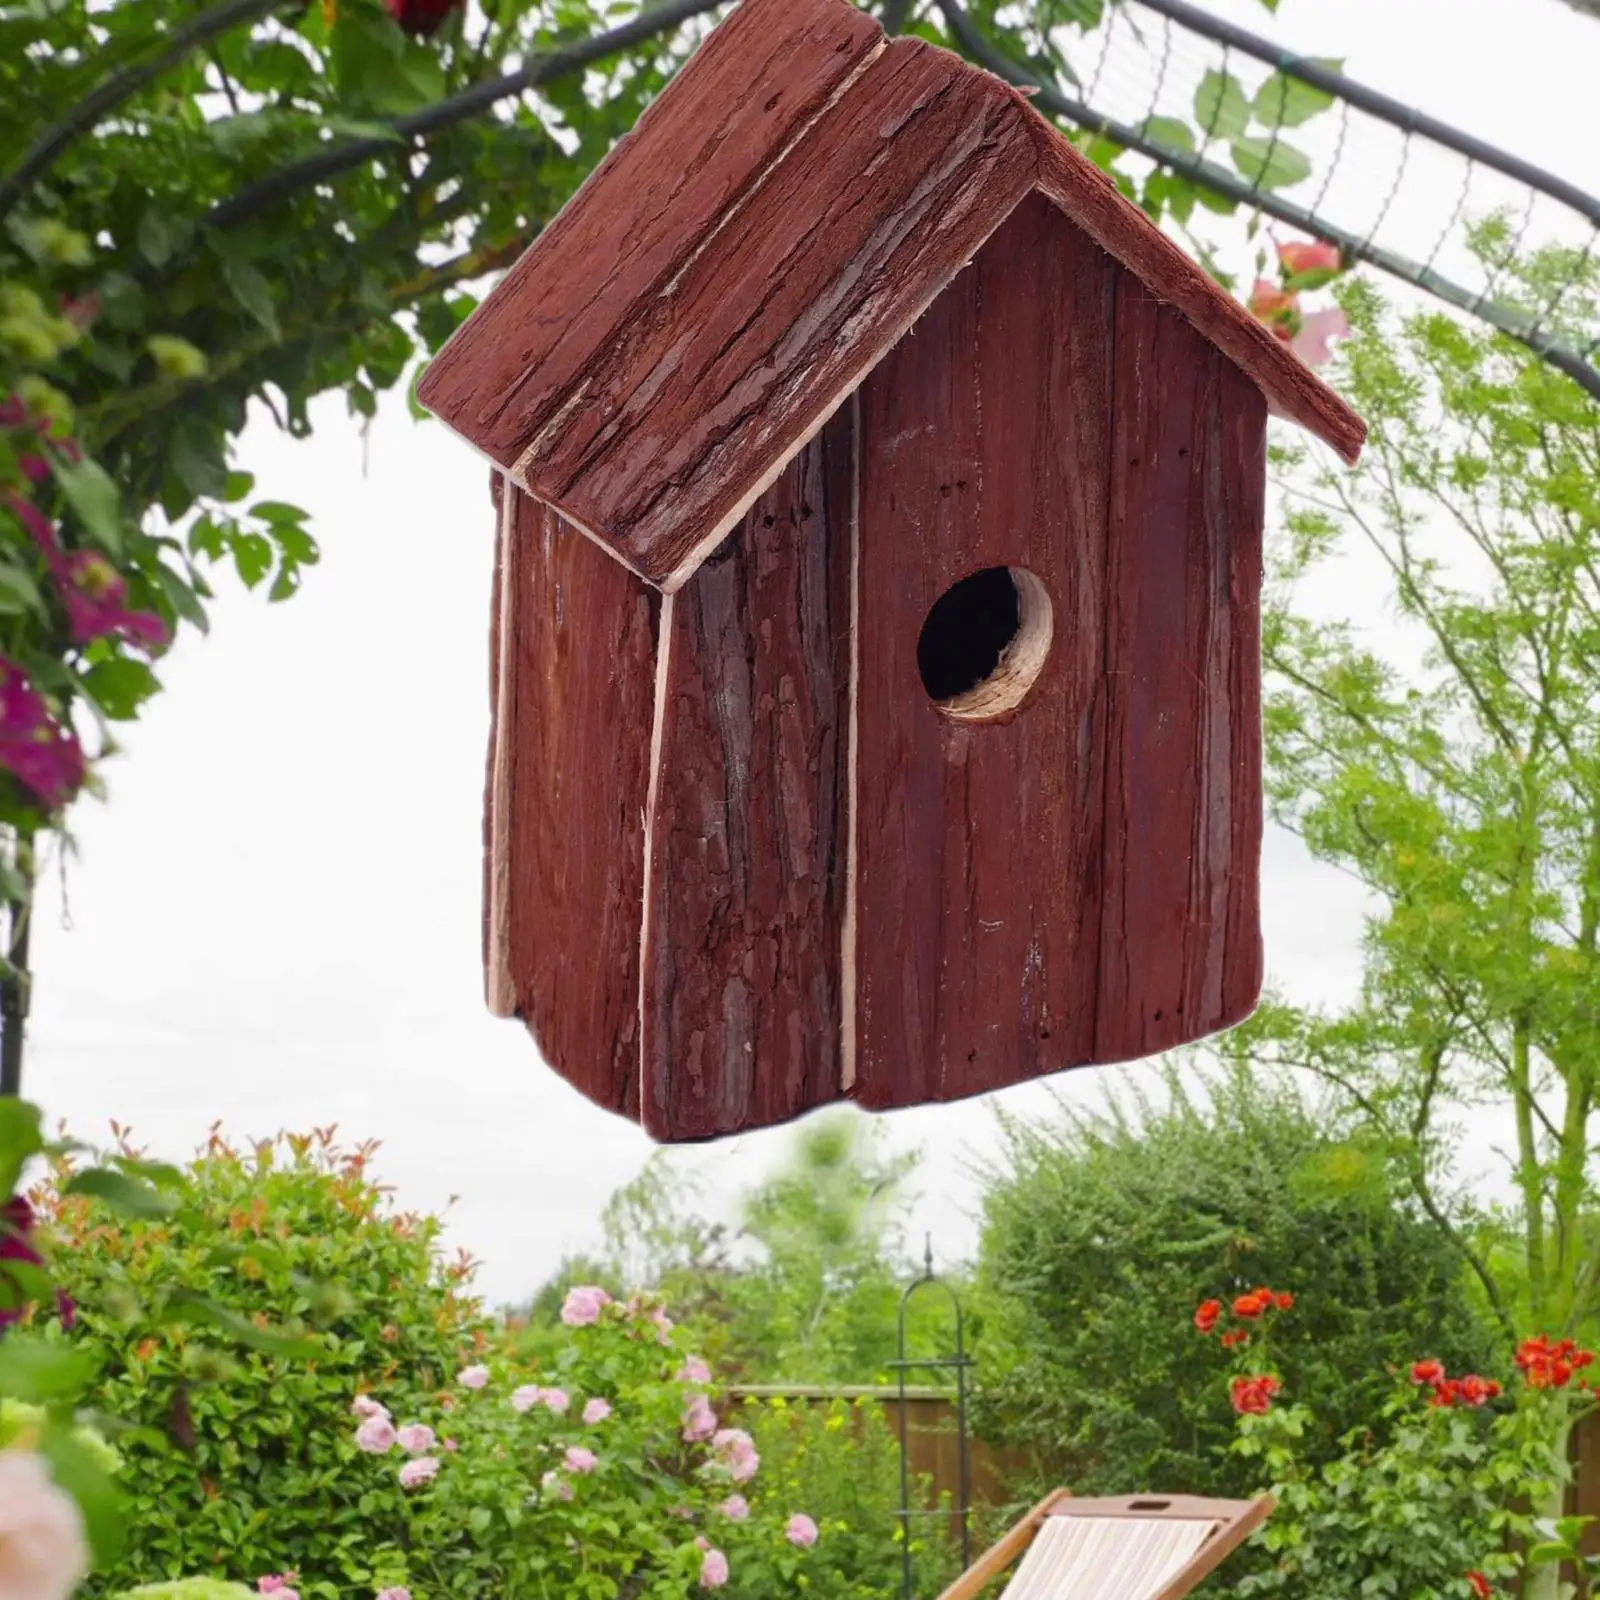 Hummingbird Houses Durable Sturdy Creative Wood Birds House Bird House Room for Yard Backyard Outside Garden Hummingbirds